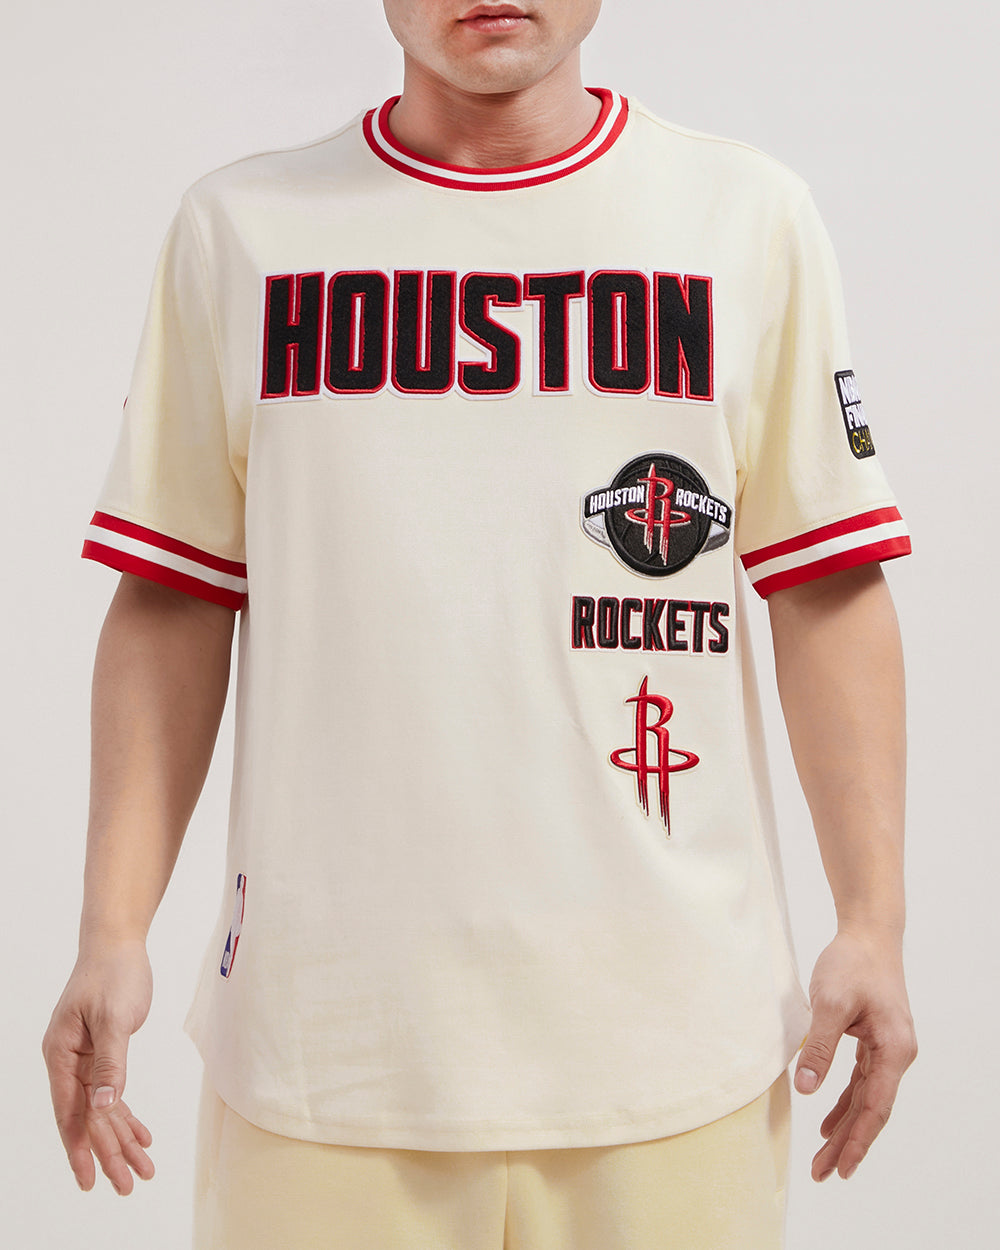 Houston Rockets Retro T Shirt